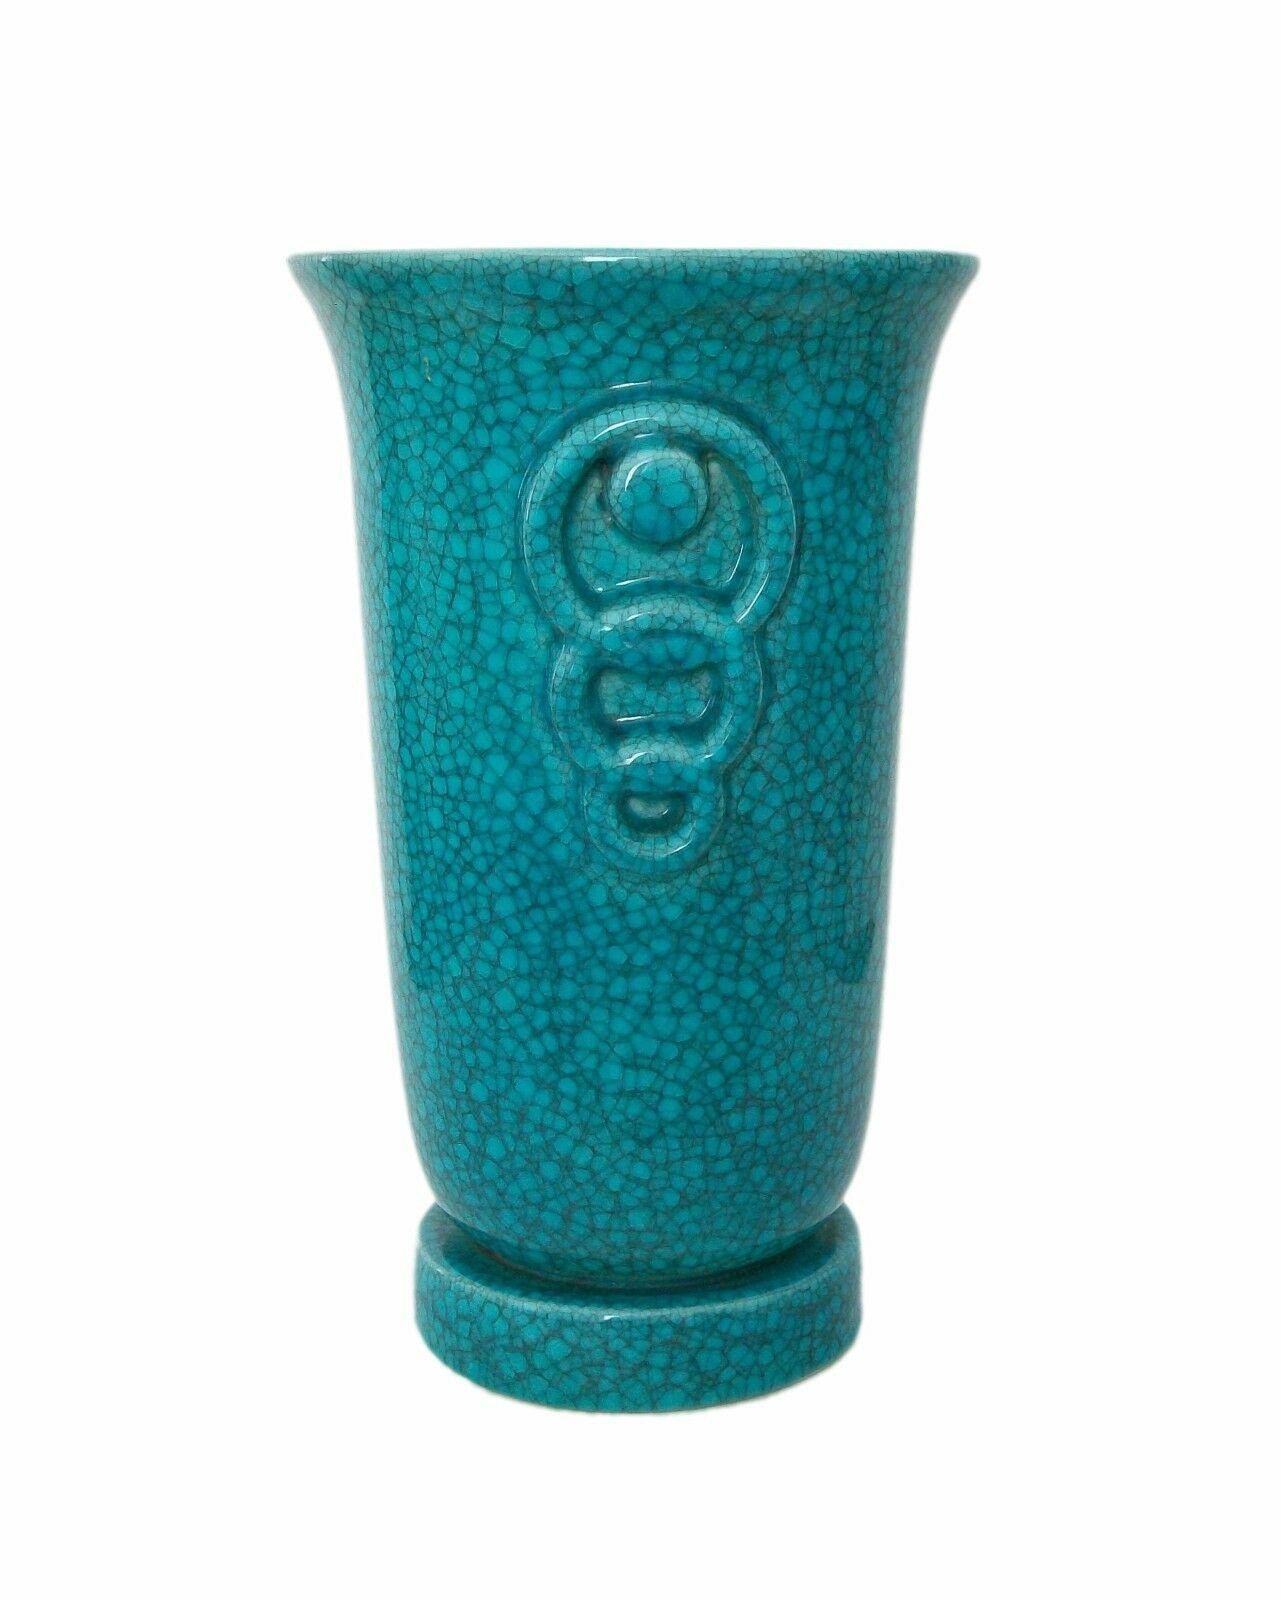 20th Century Art Deco Turquoise Crackle Glaze Vase, Belgium, Circa 1930's For Sale